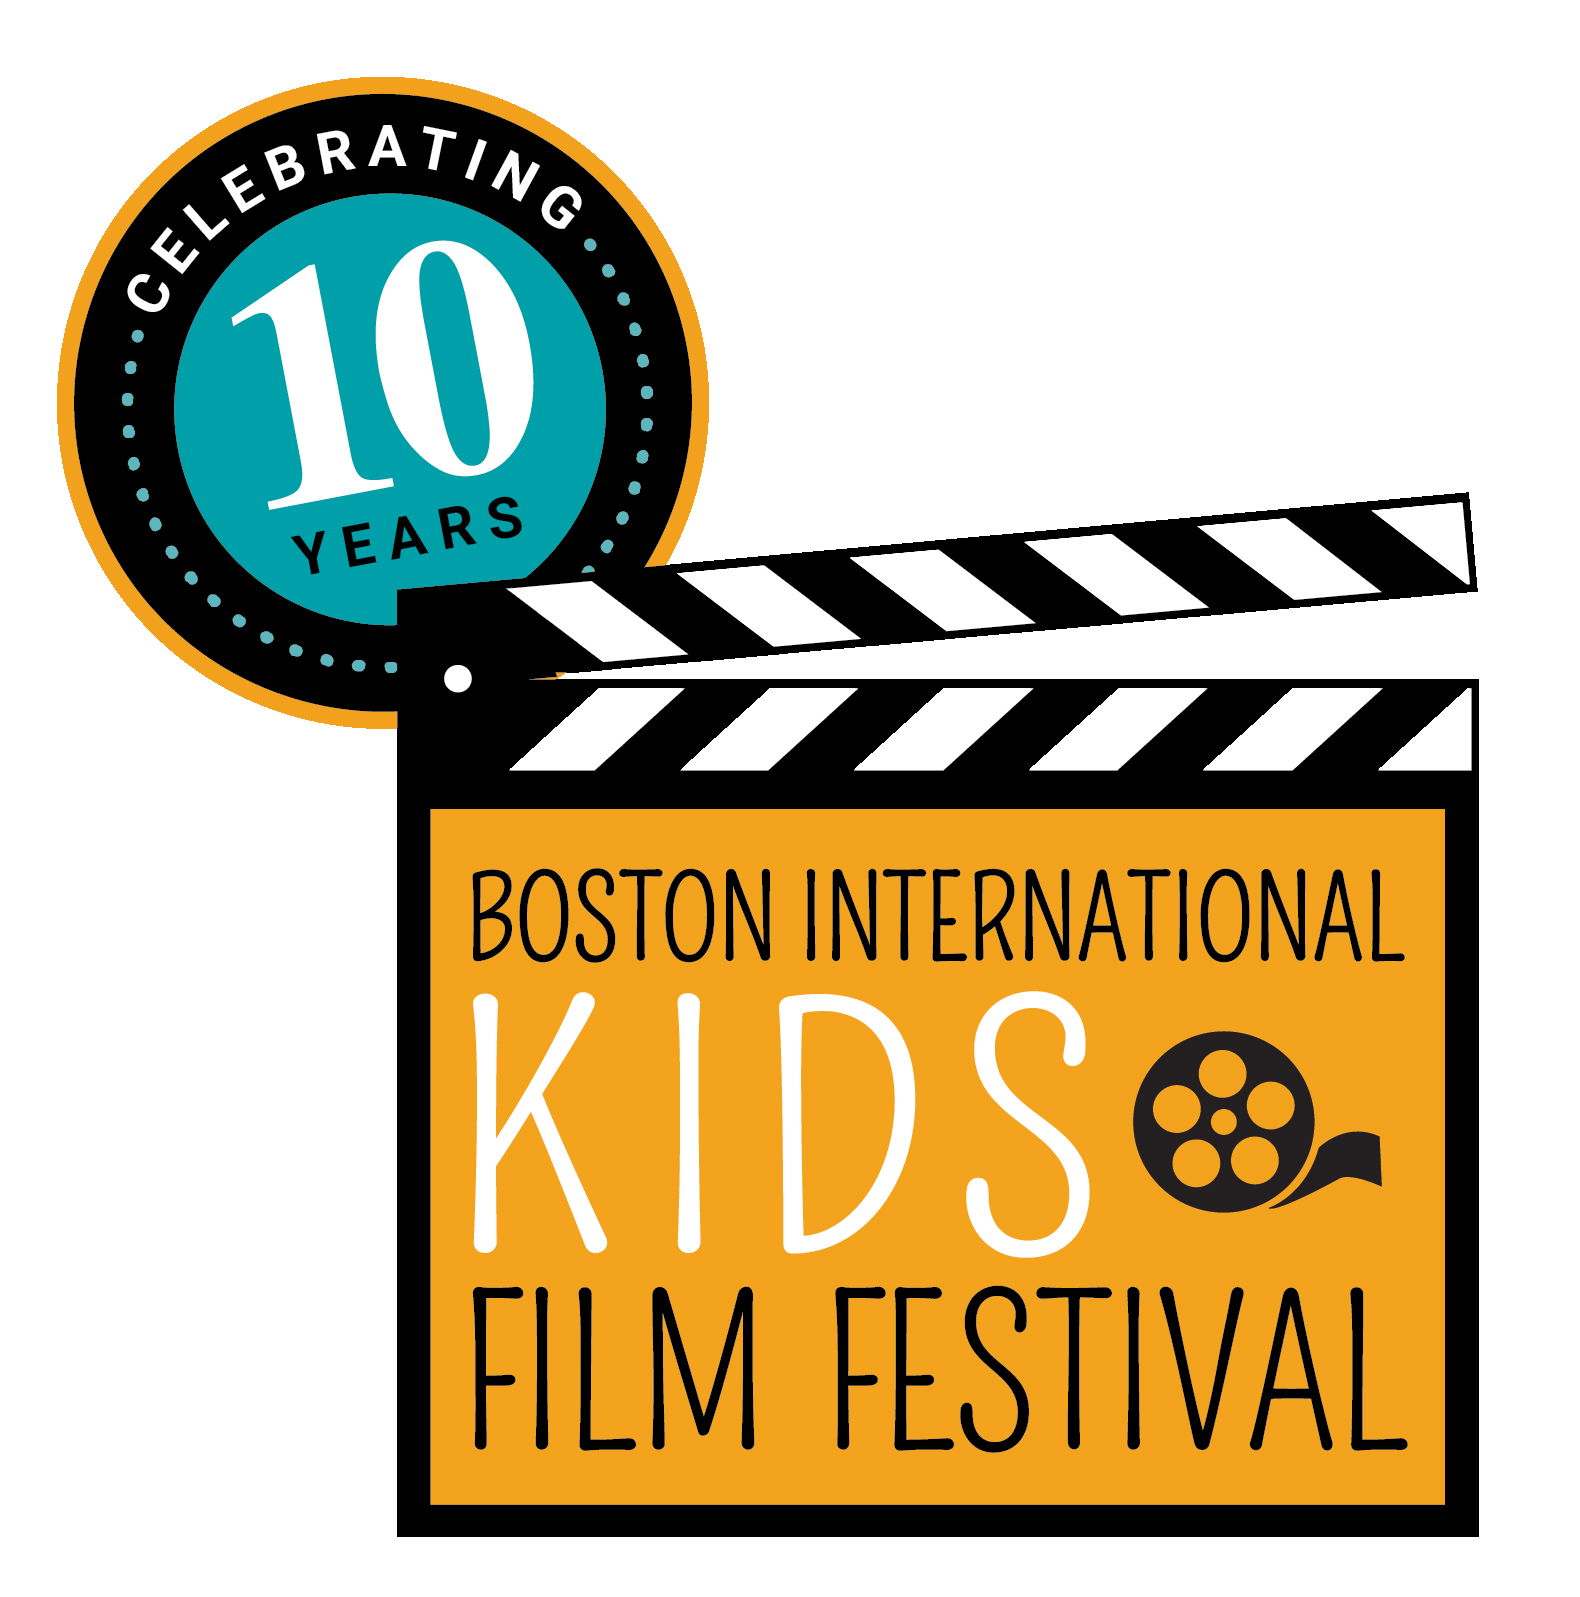 Boston International Kids Film Festival Celebrates Ten Years (Watertown, MA.)